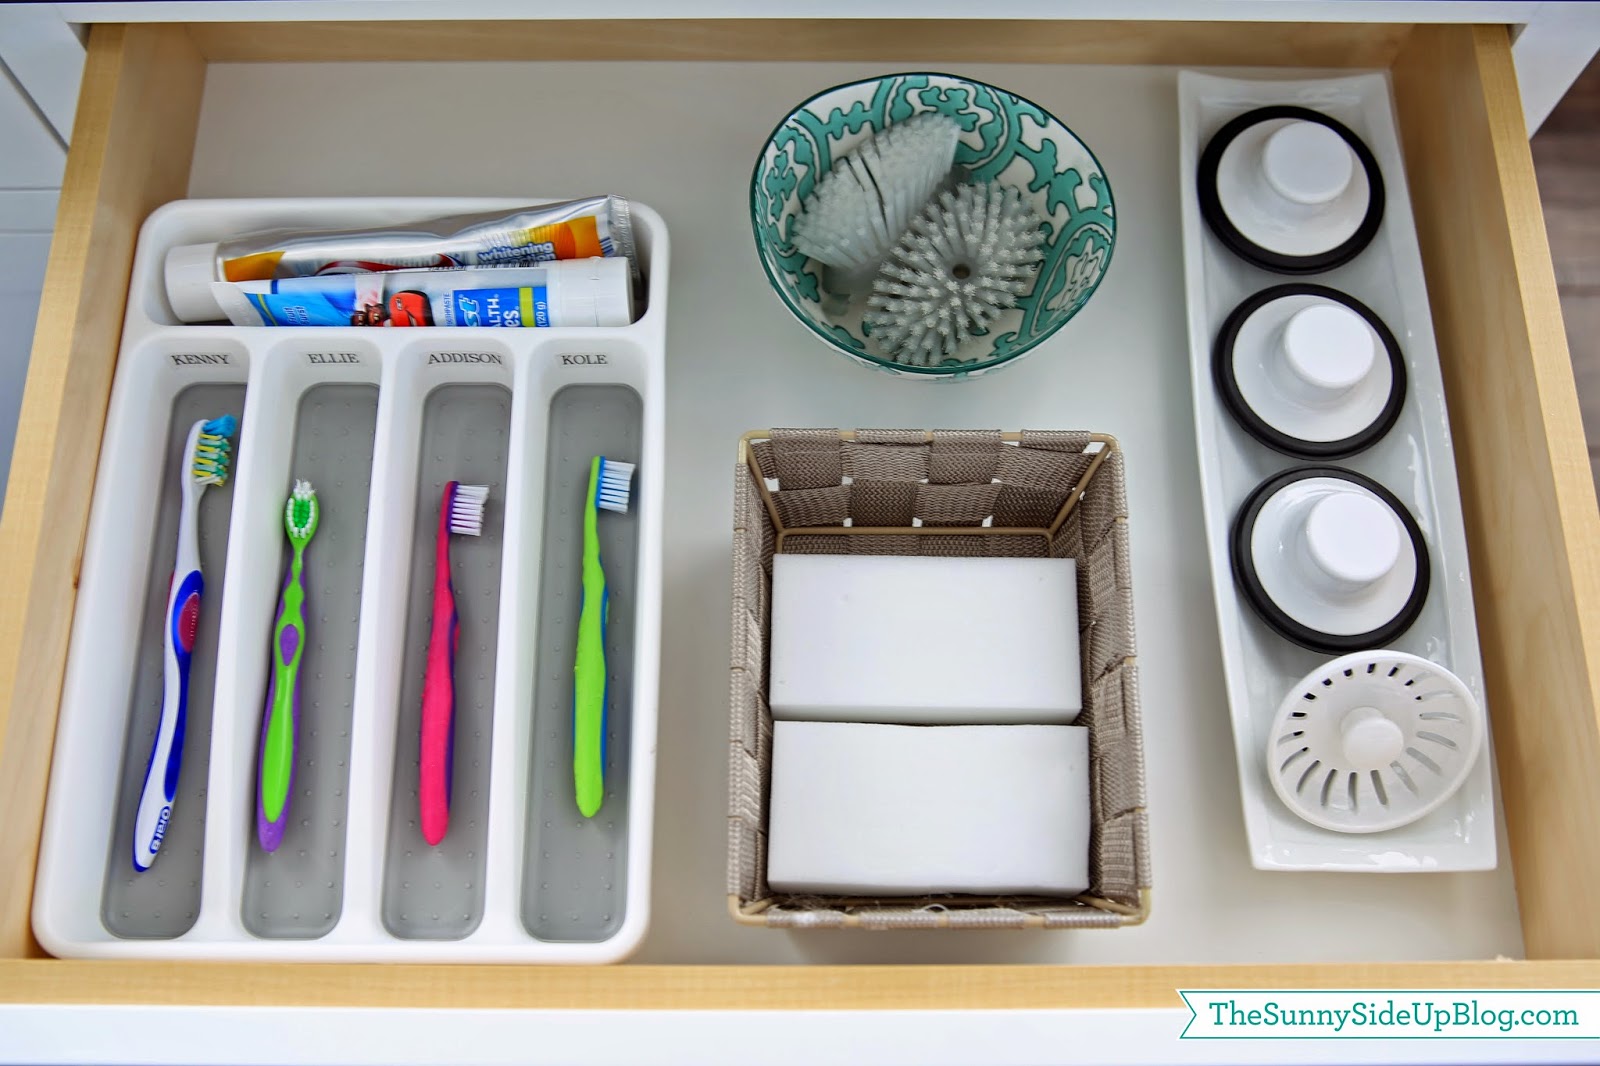 https://www.thesunnysideupblog.com/wp-content/uploads/2014/06/organized-kitchen-toothbrush-drawer.jpg